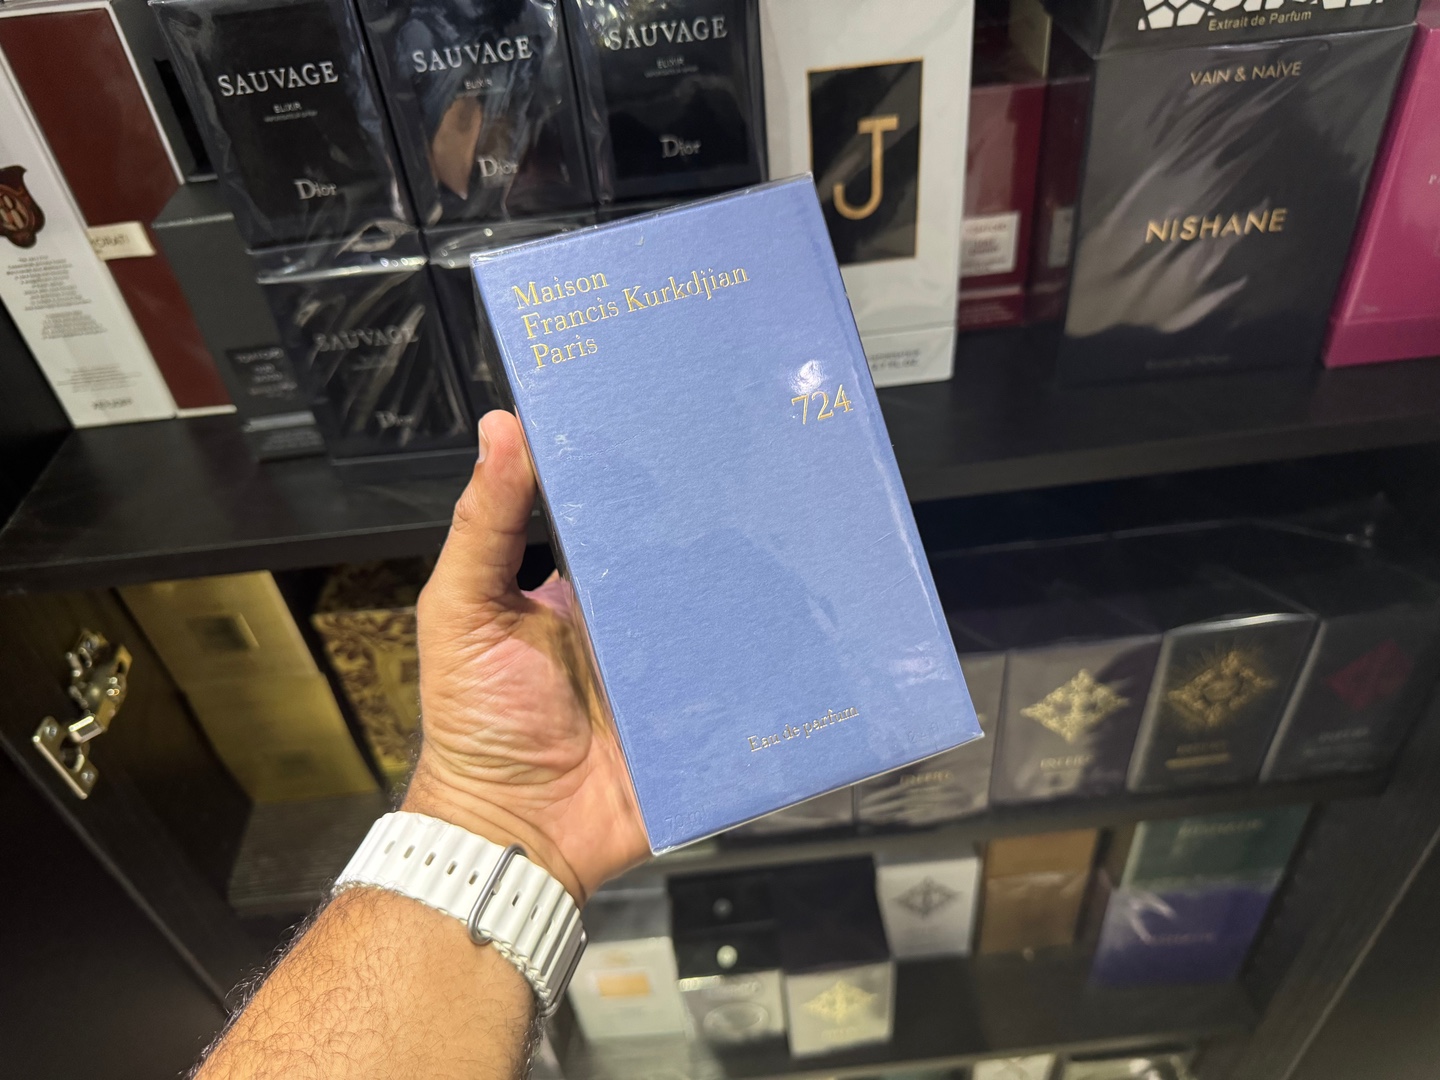 joyas, relojes y accesorios - Perfumes Maison Francis Kurkdjian Paris 724 Nuevos 70ml Originales $ 17,700 NEG